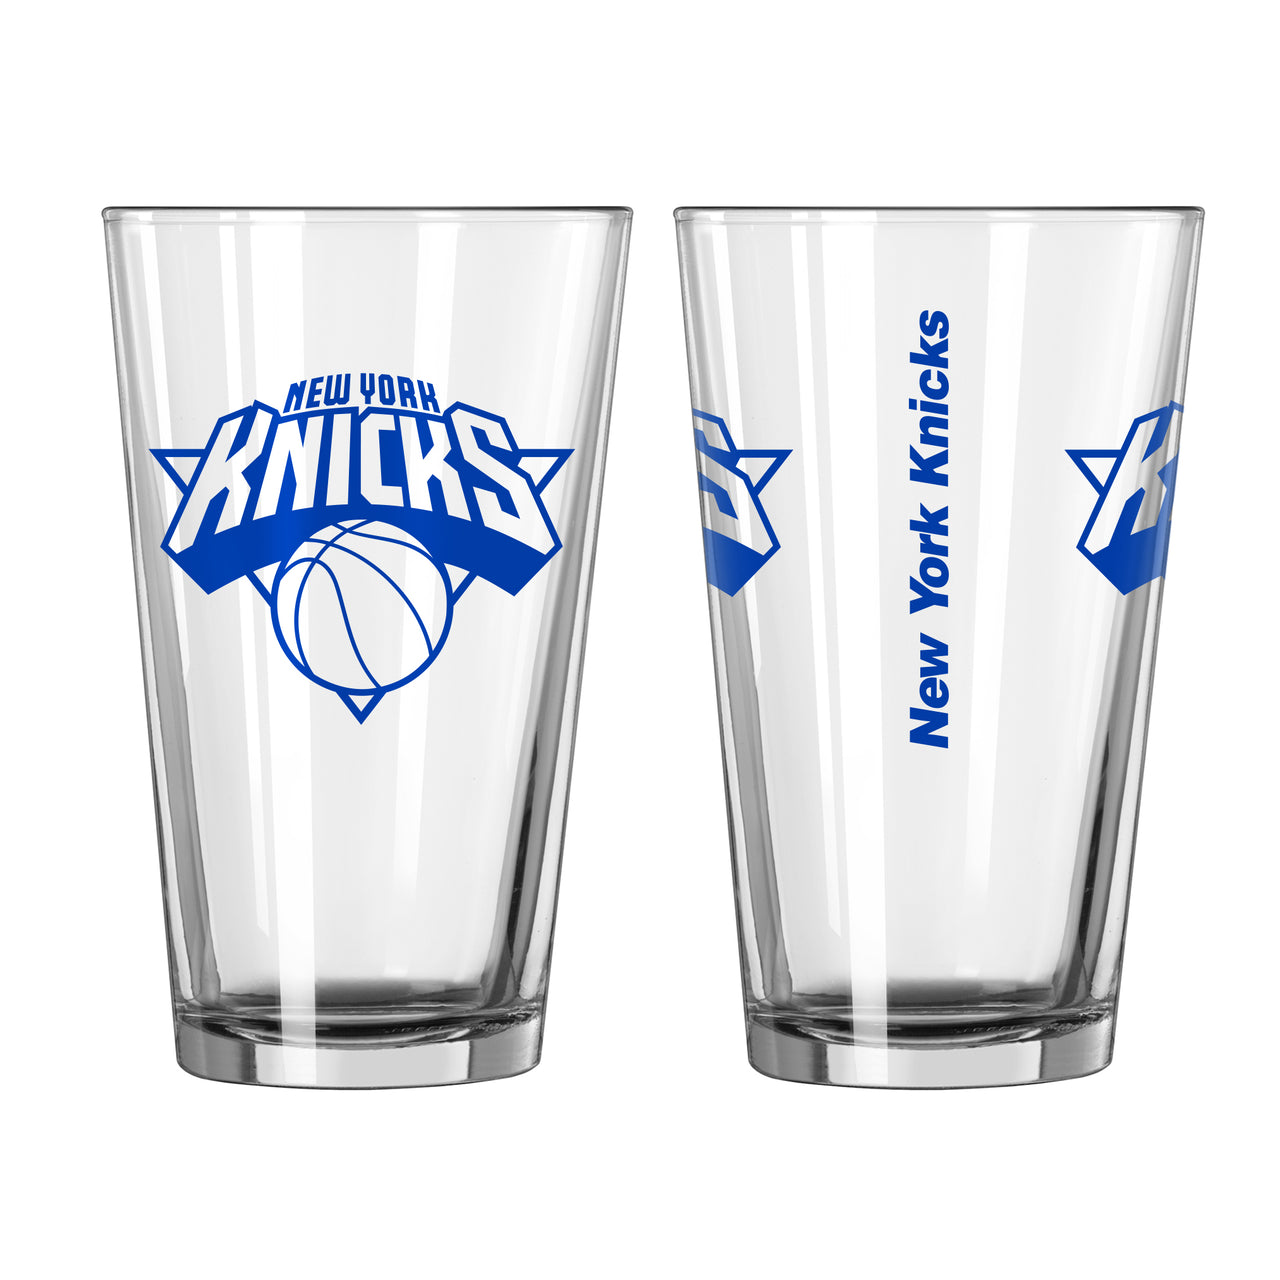 New York Knicks Game Day Pint Glass - Dynasty Sports & Framing 